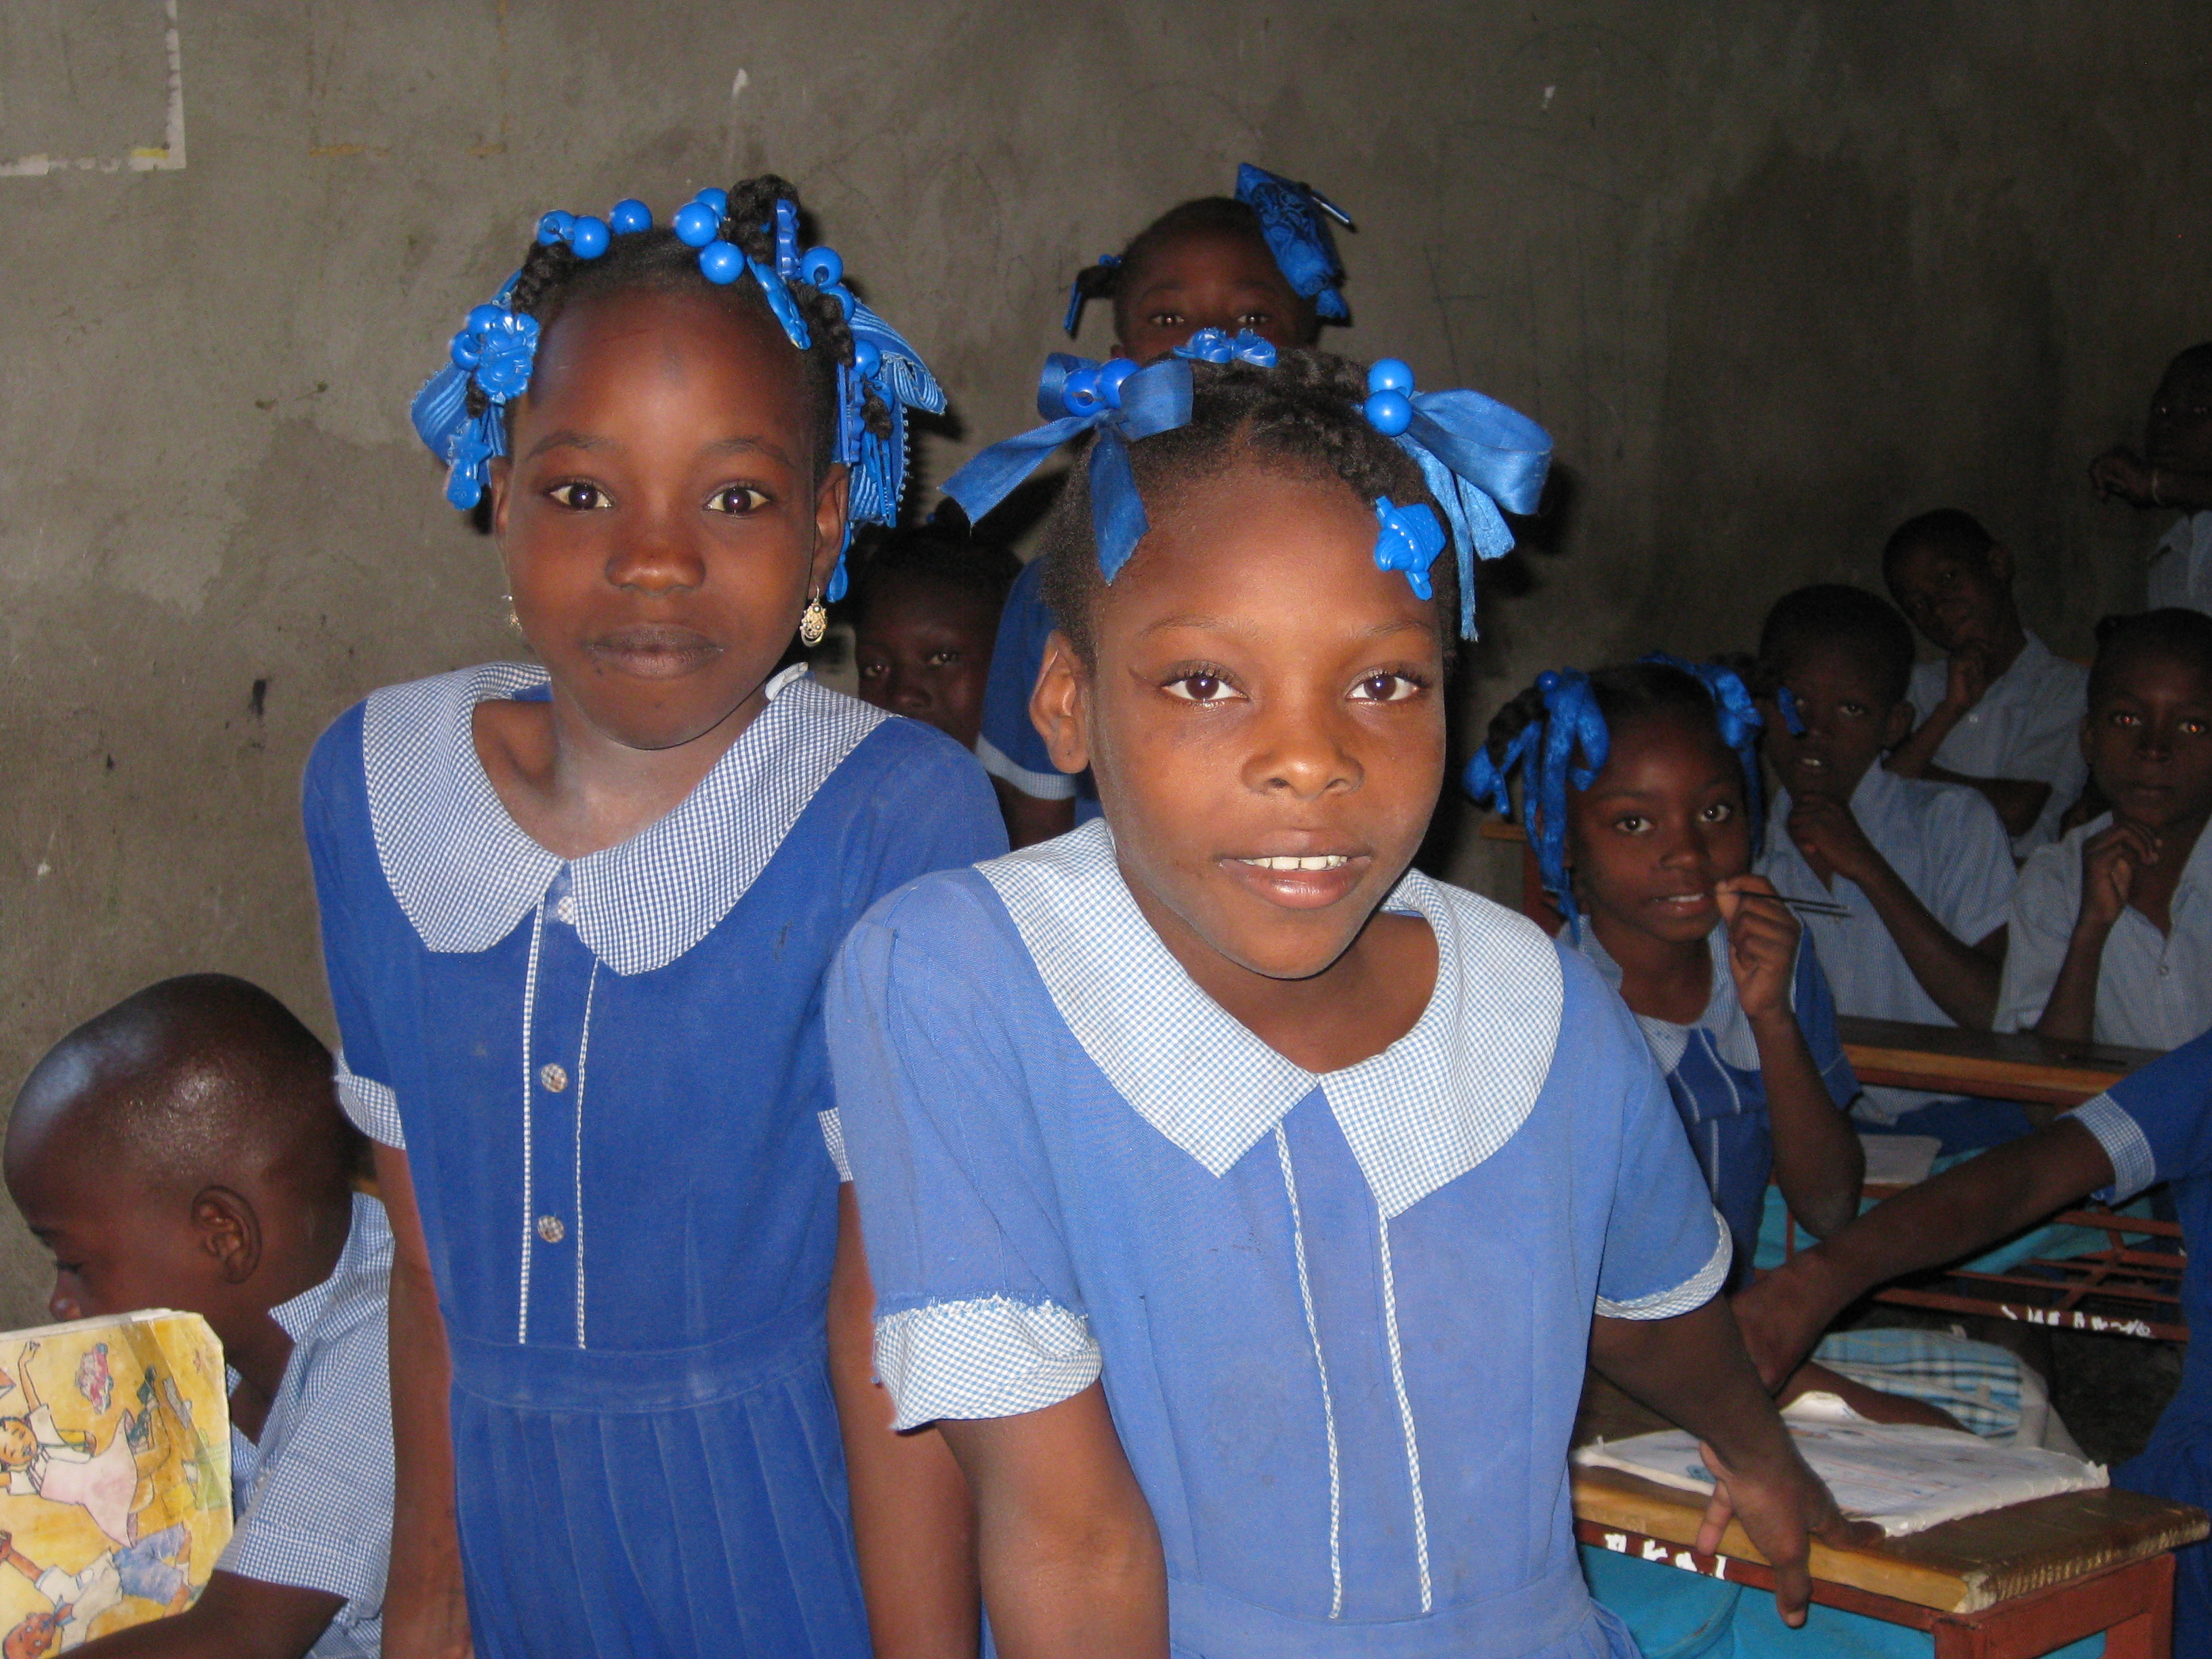 Textbooks Needed for 500 School Children in Haiti